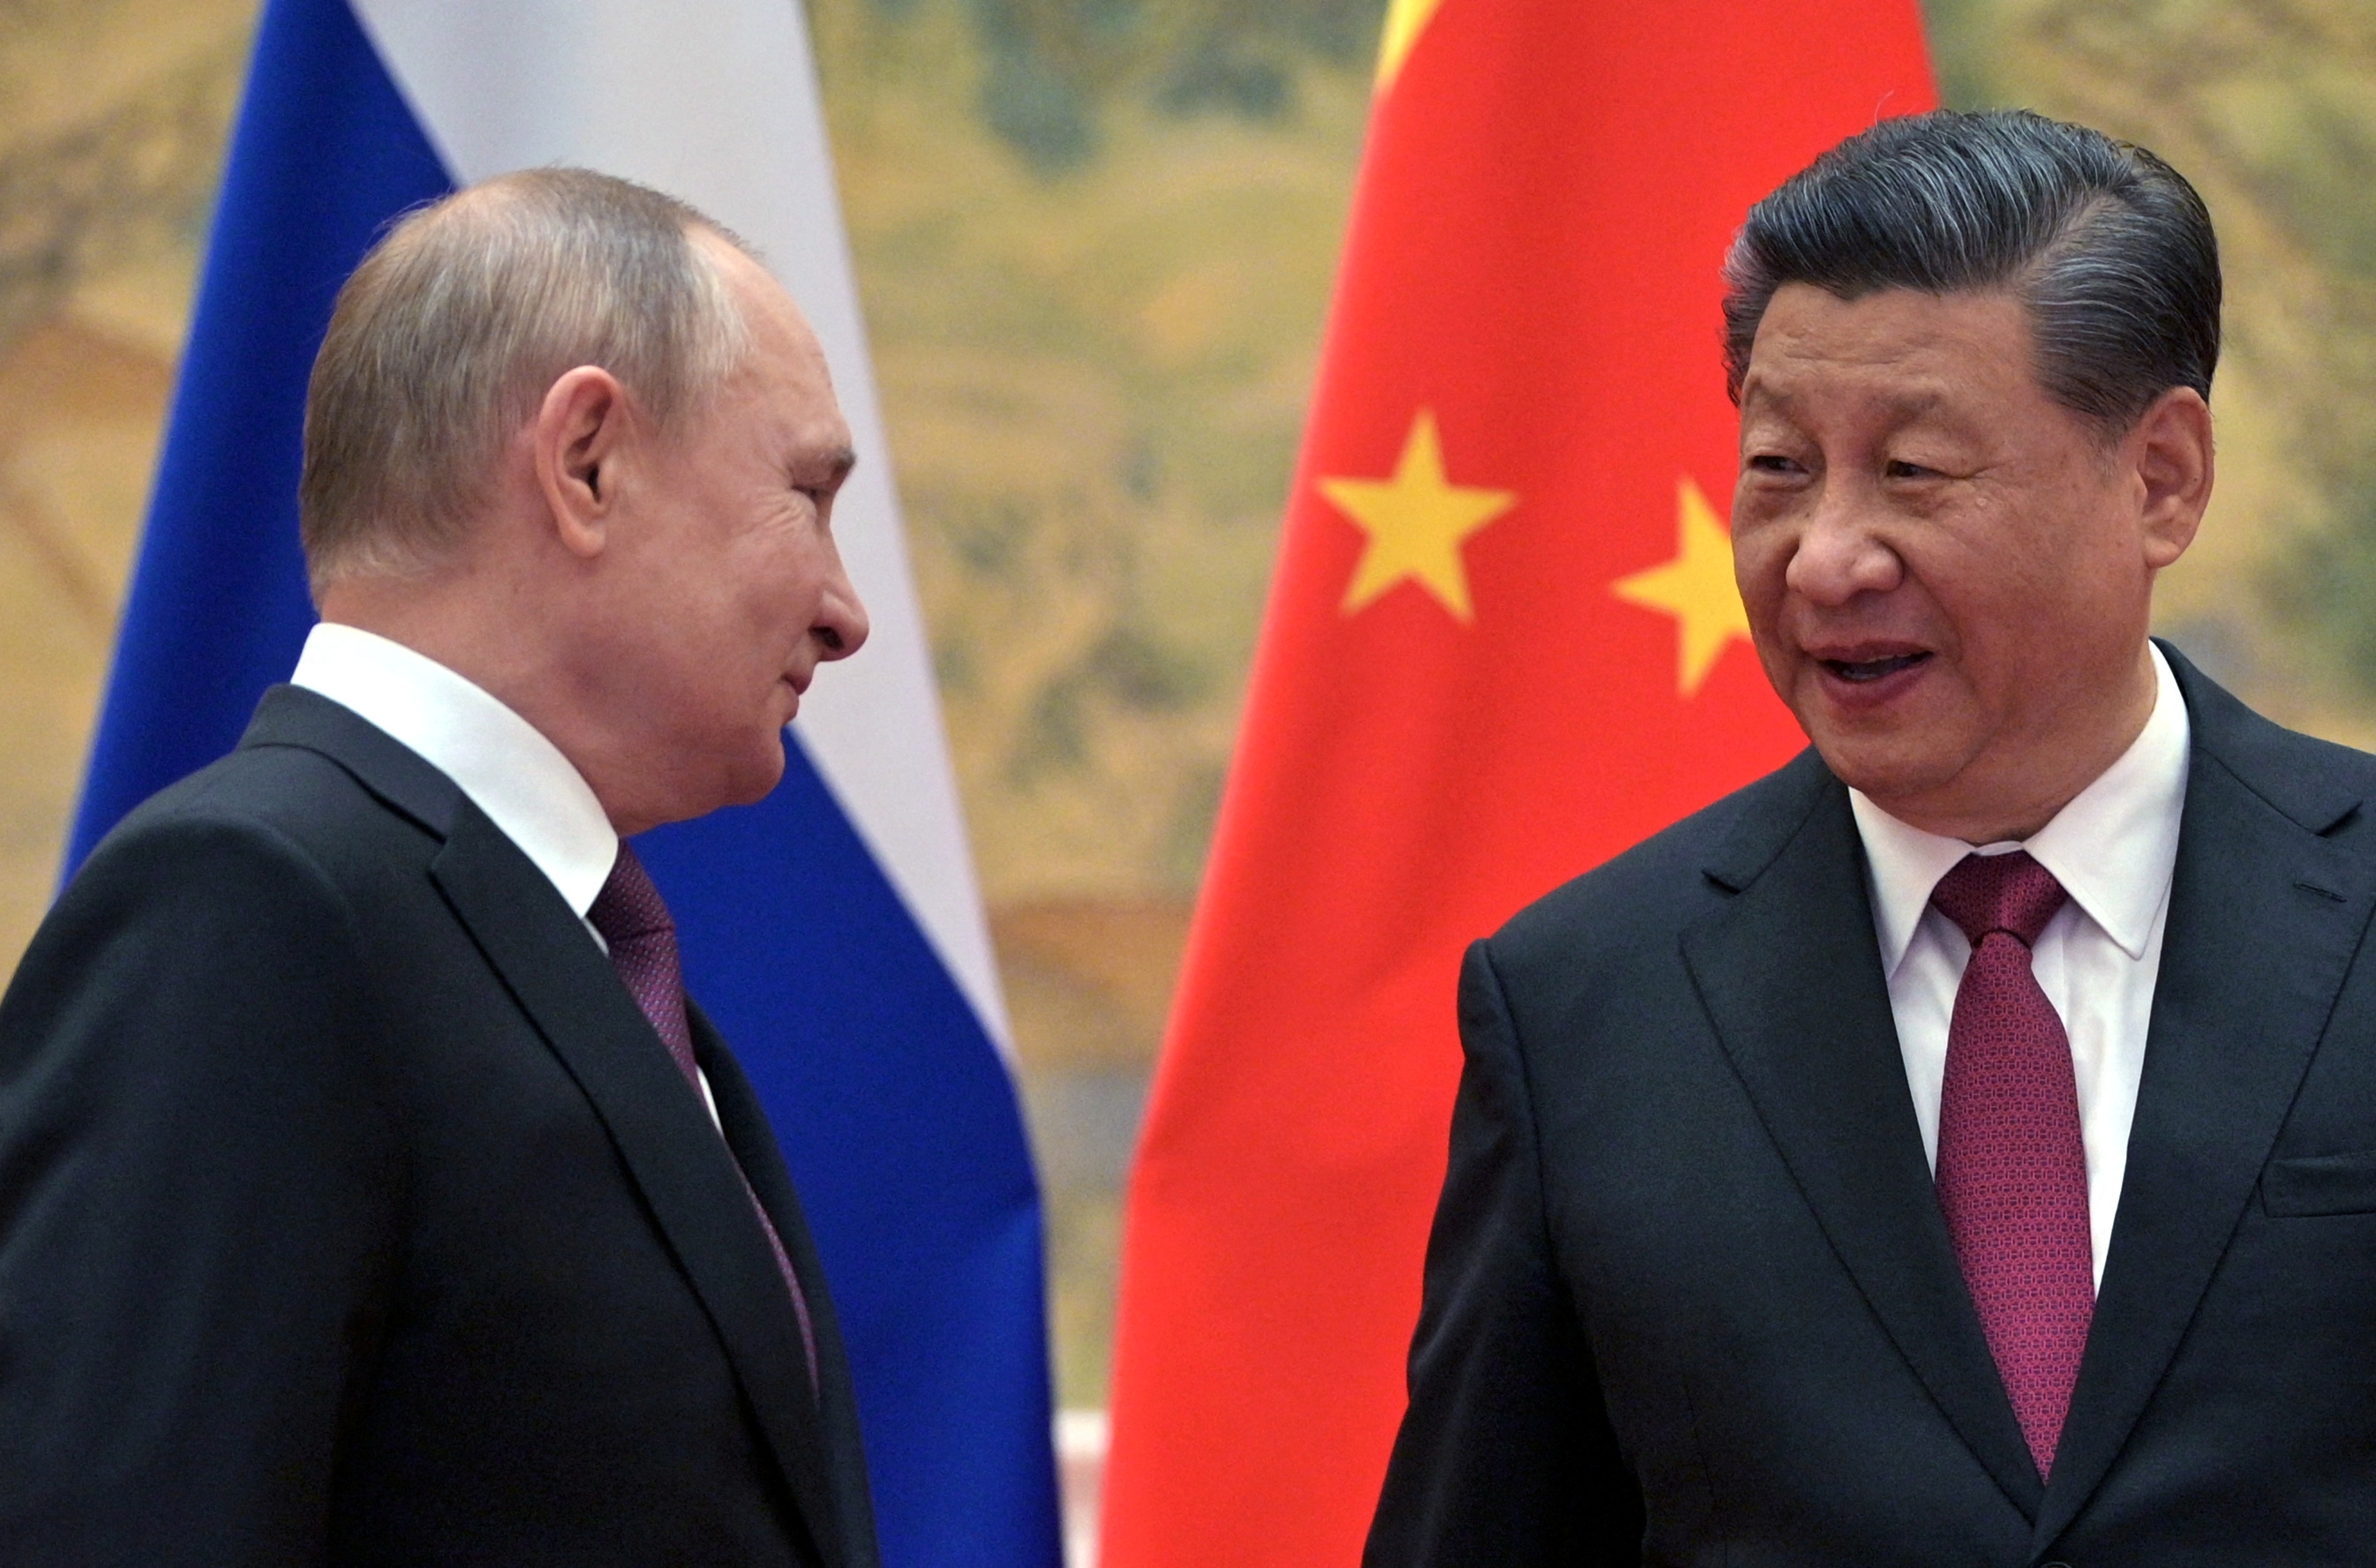 Russian President Vladimir Putin attends a meeting with Chinese President Xi Jinping in Beijing, China on February 4, 2022. Sputnik/Aleksey Druzhinin/Kremlin via REUTERS 